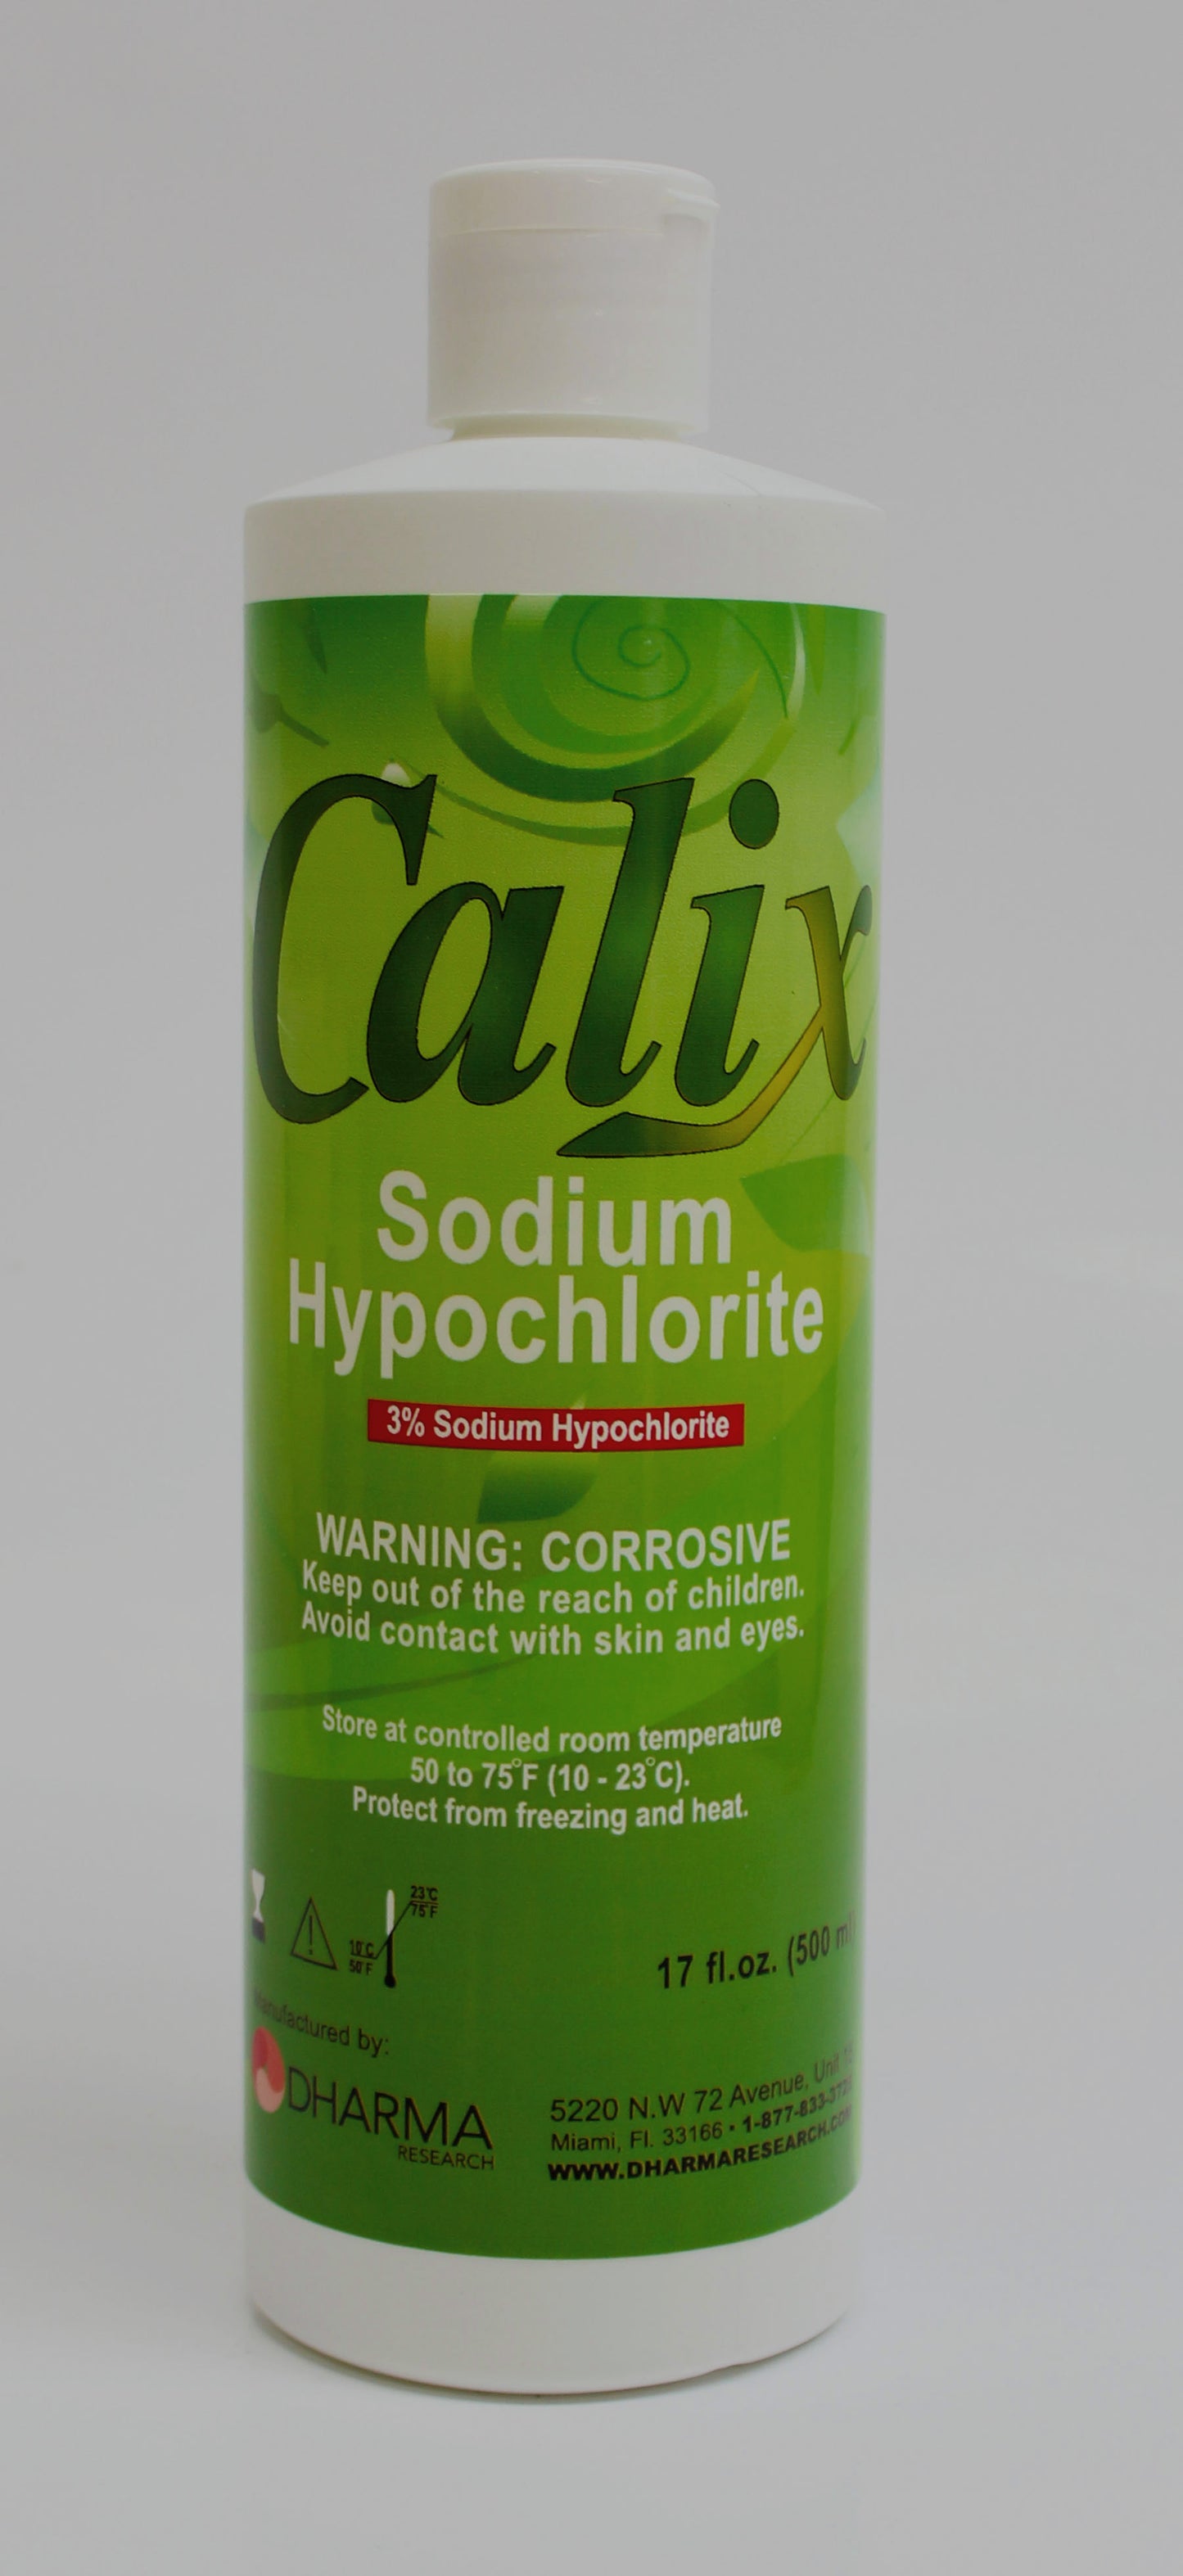 Calix 3% Sodium Hypochlorite Solution